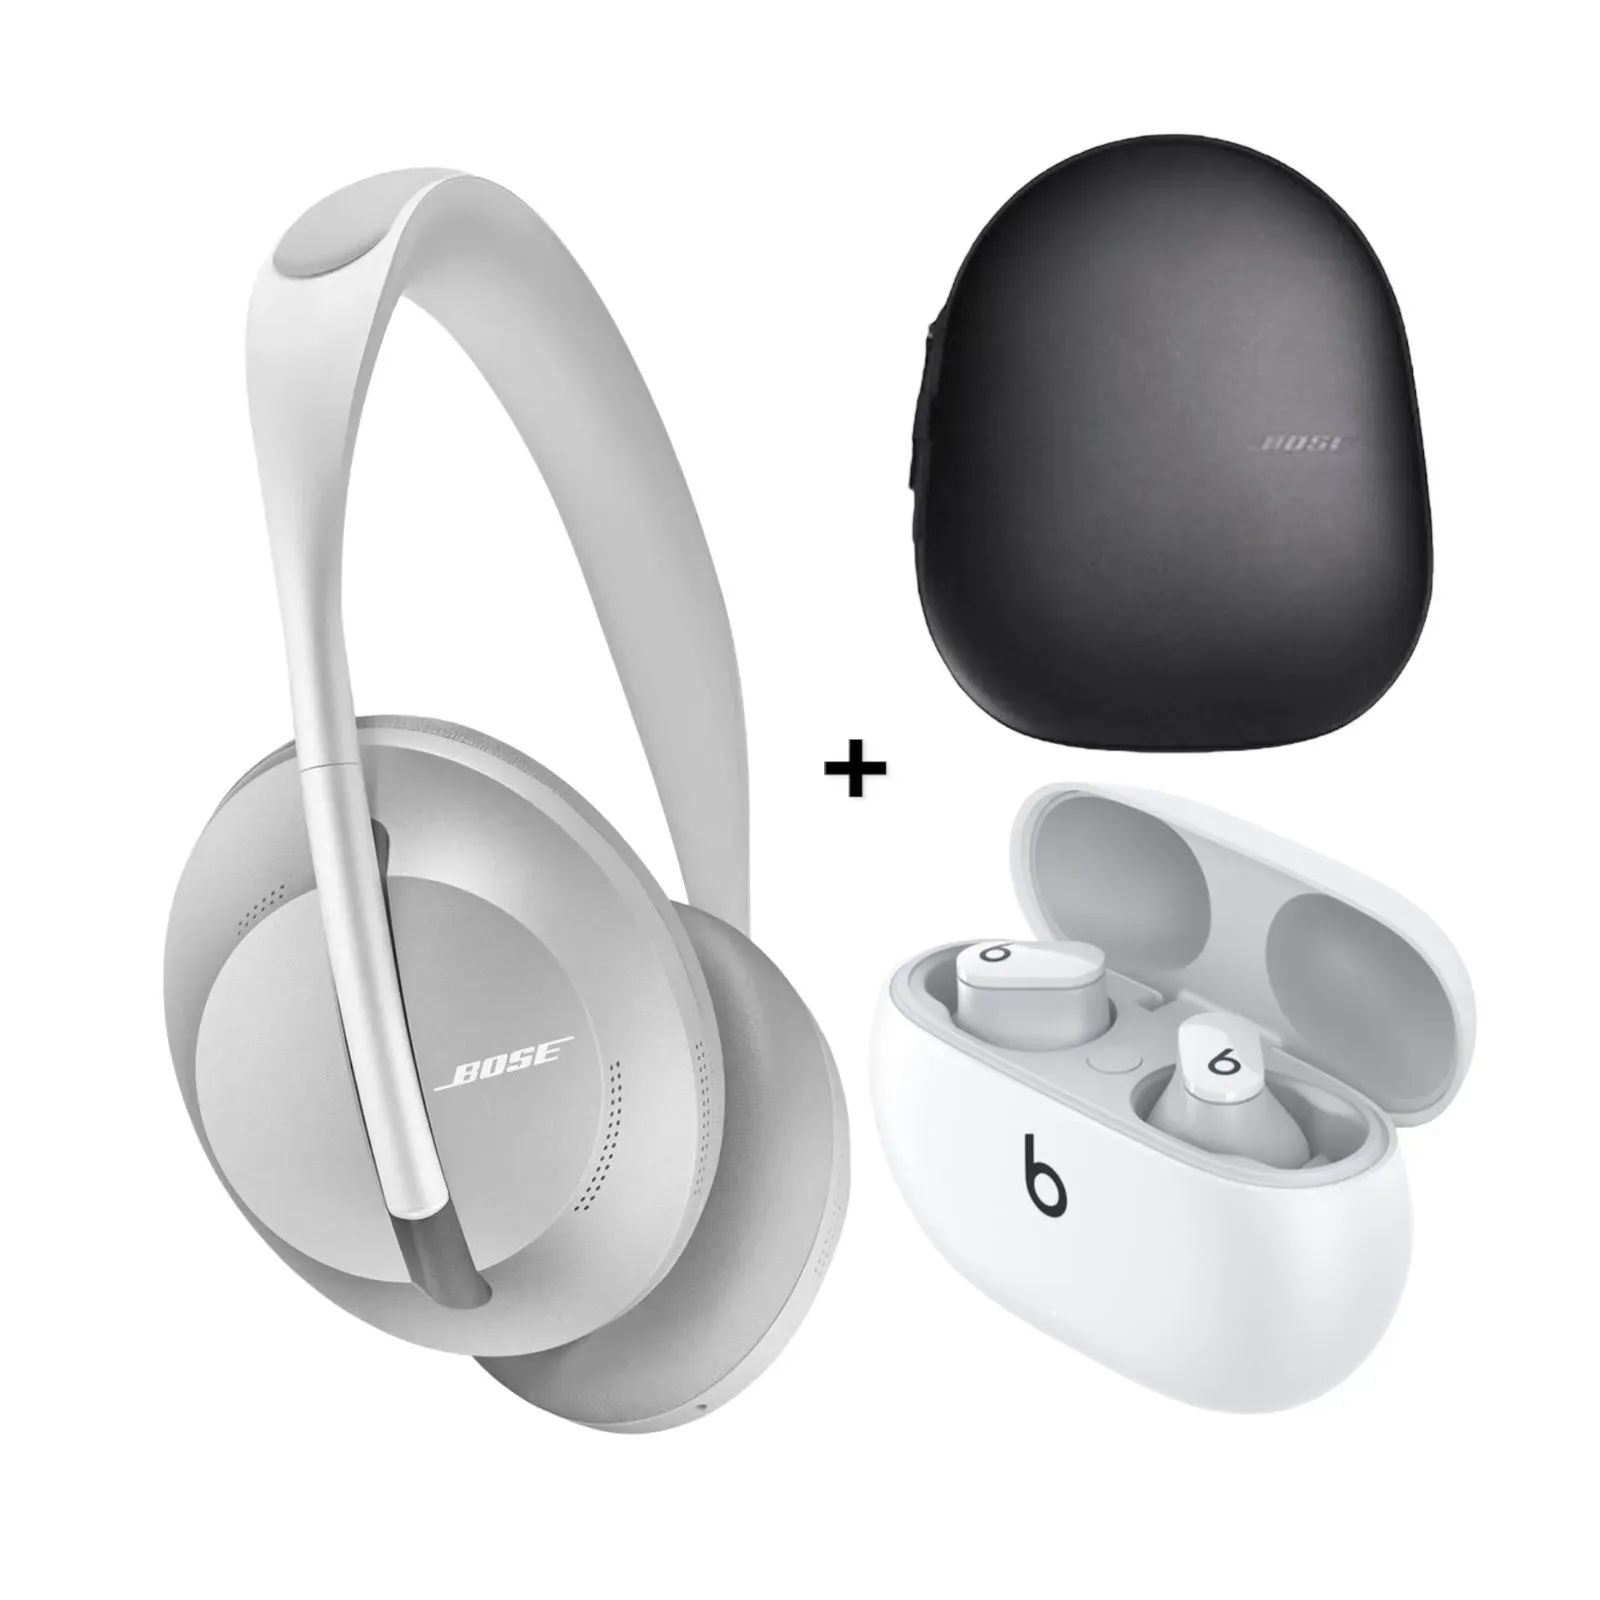 Audifonos Bluetooth Beats + Auriculares Bluetooth Tipo Bose 700